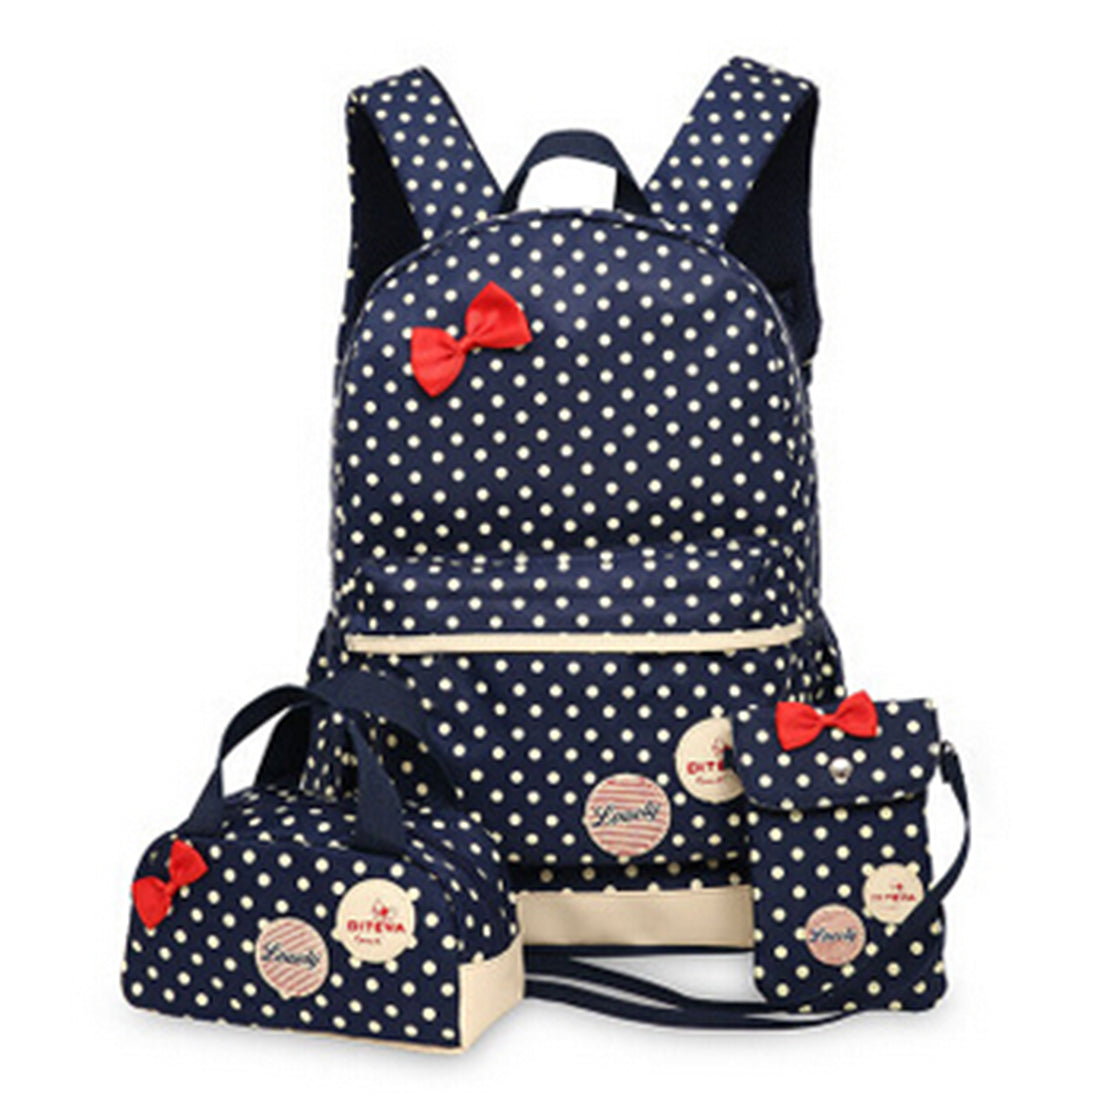 New 3 Pcs/Set New waterproof Girl School Bags For Teenagers backpack women shoulder bags - ebowsos